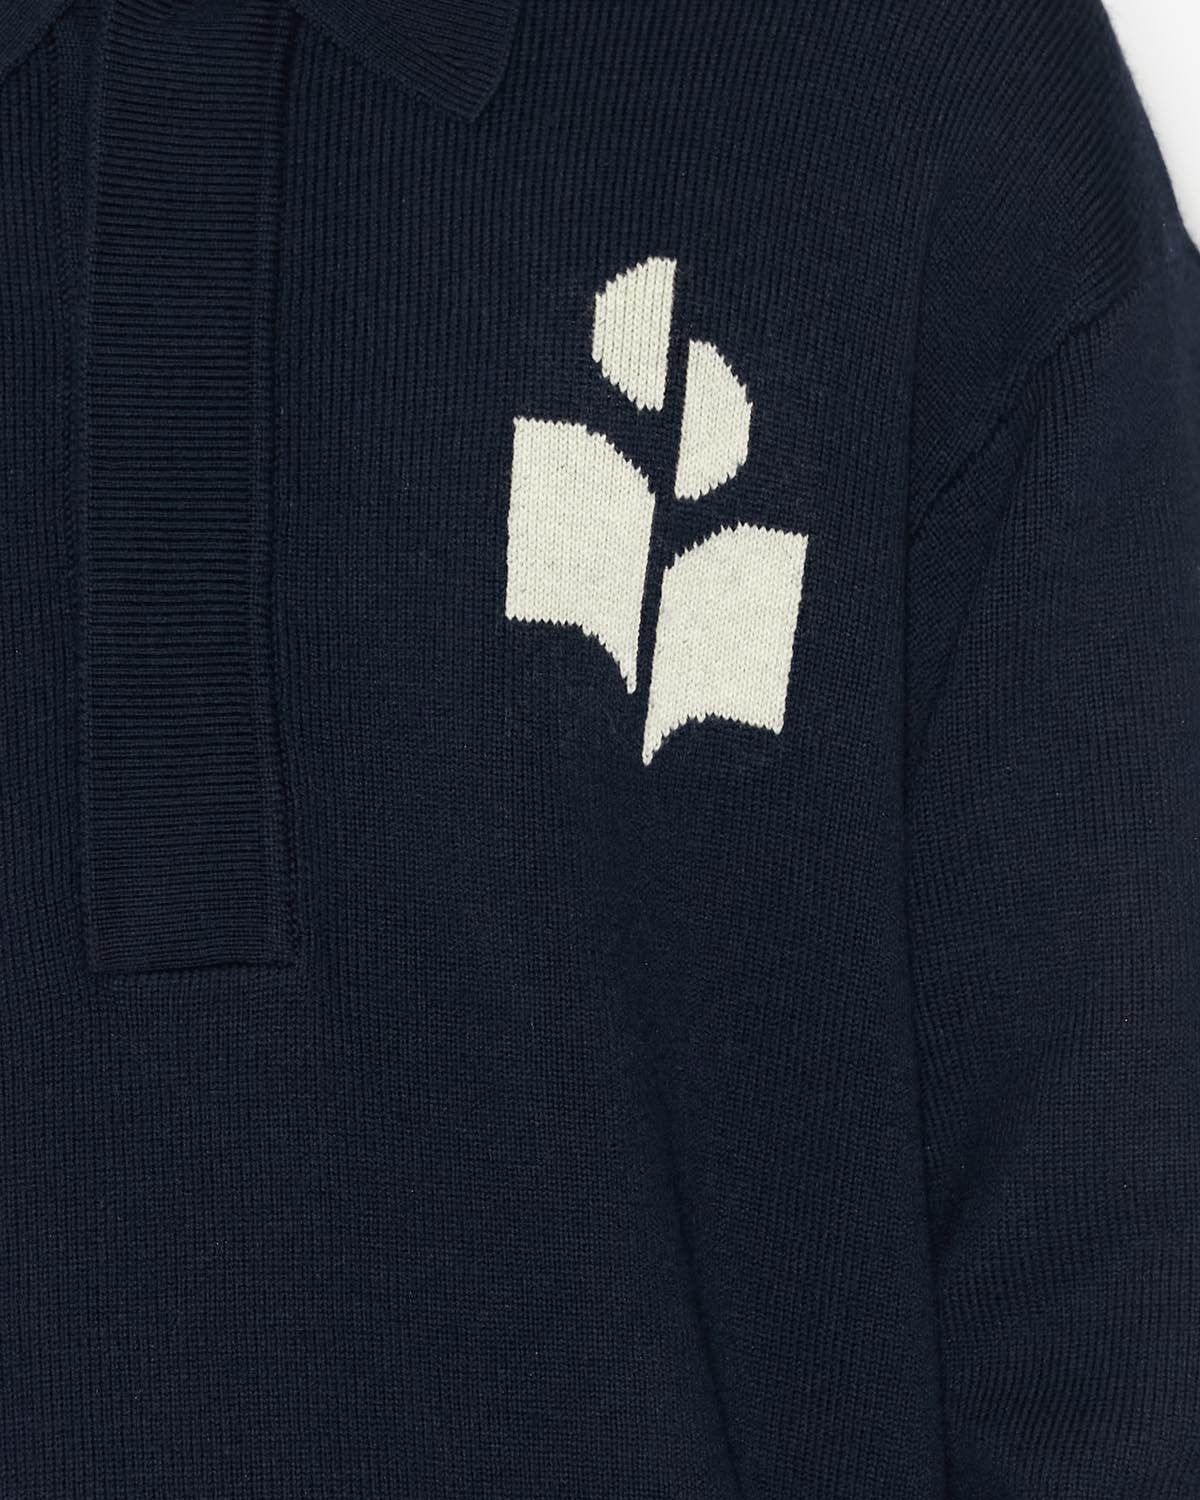 William logo 스웨터 Man Midnight 8